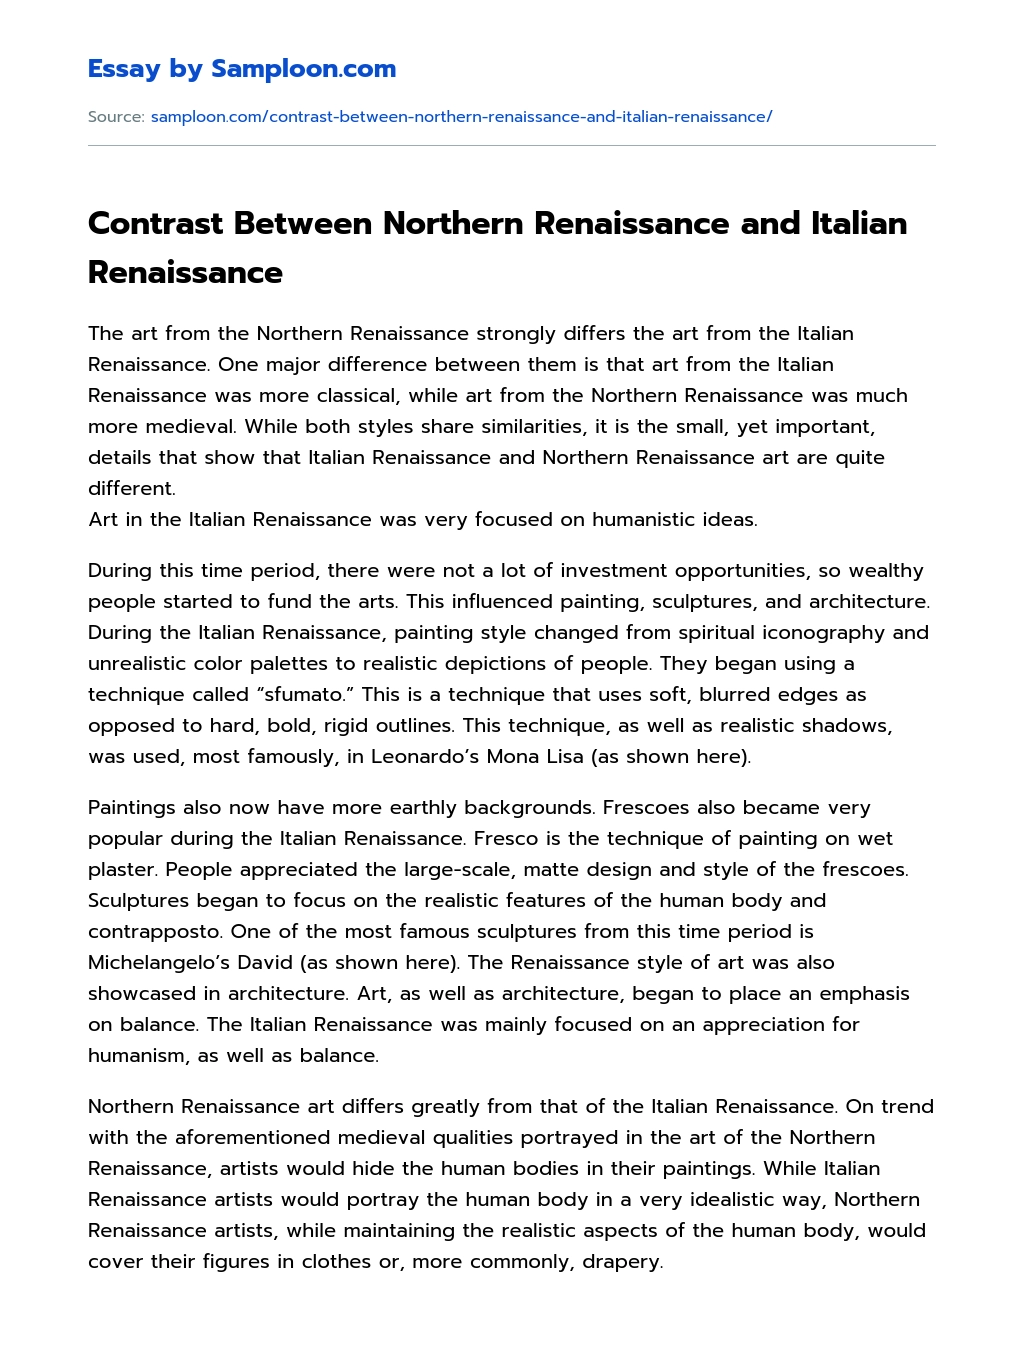 Contrast Between Northern Renaissance and Italian Renaissance essay